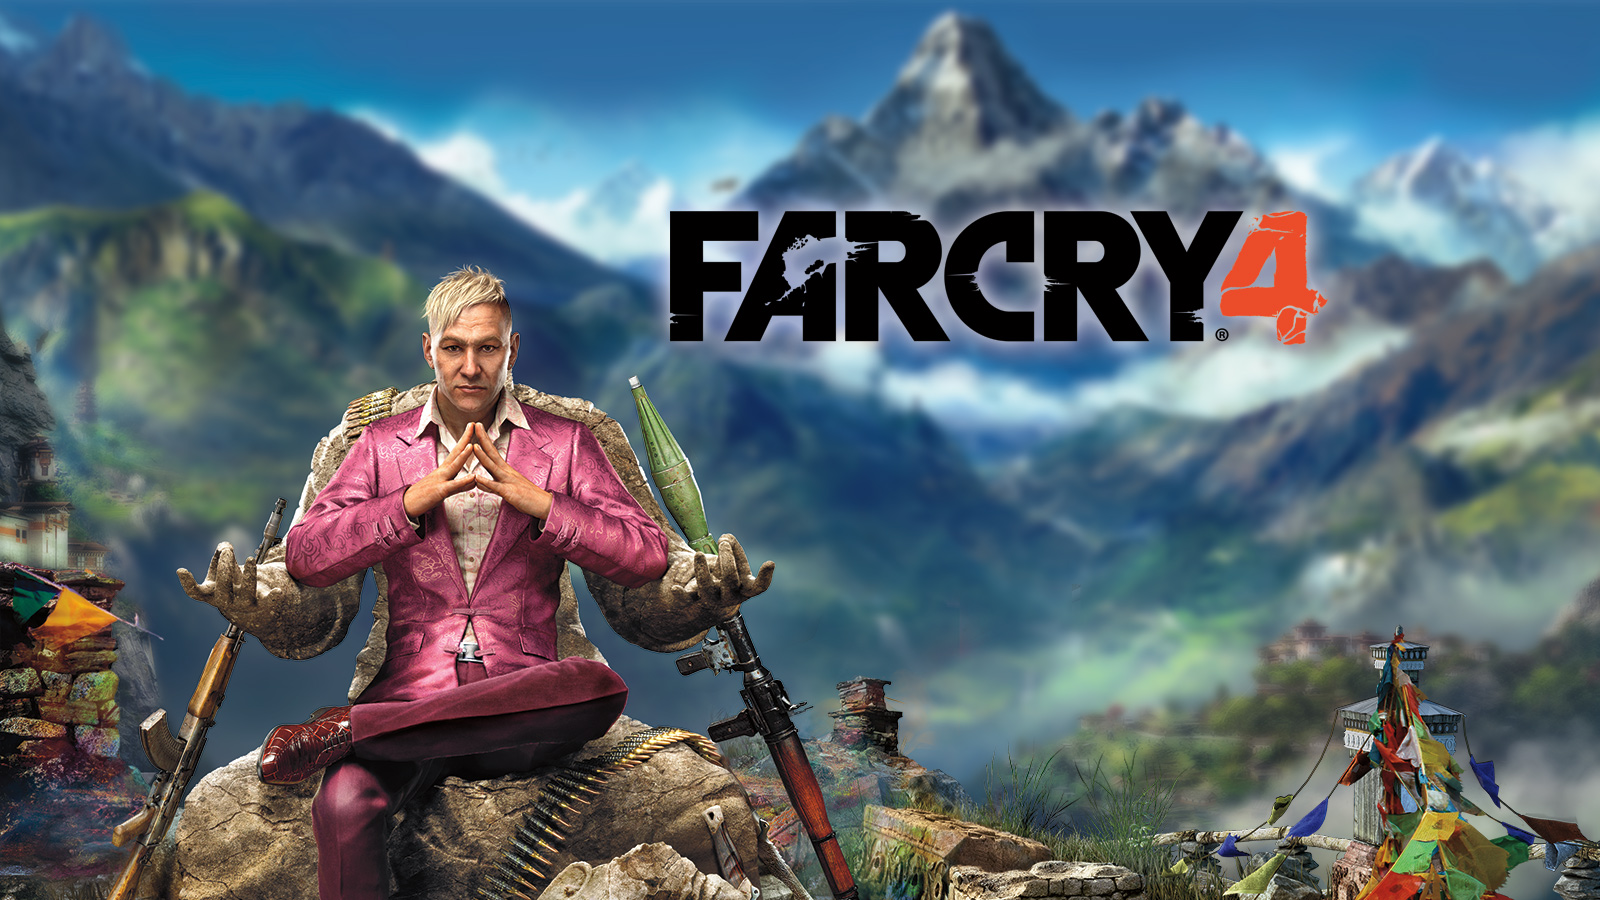 Far Cry game - Himalayas 4K wallpaper download